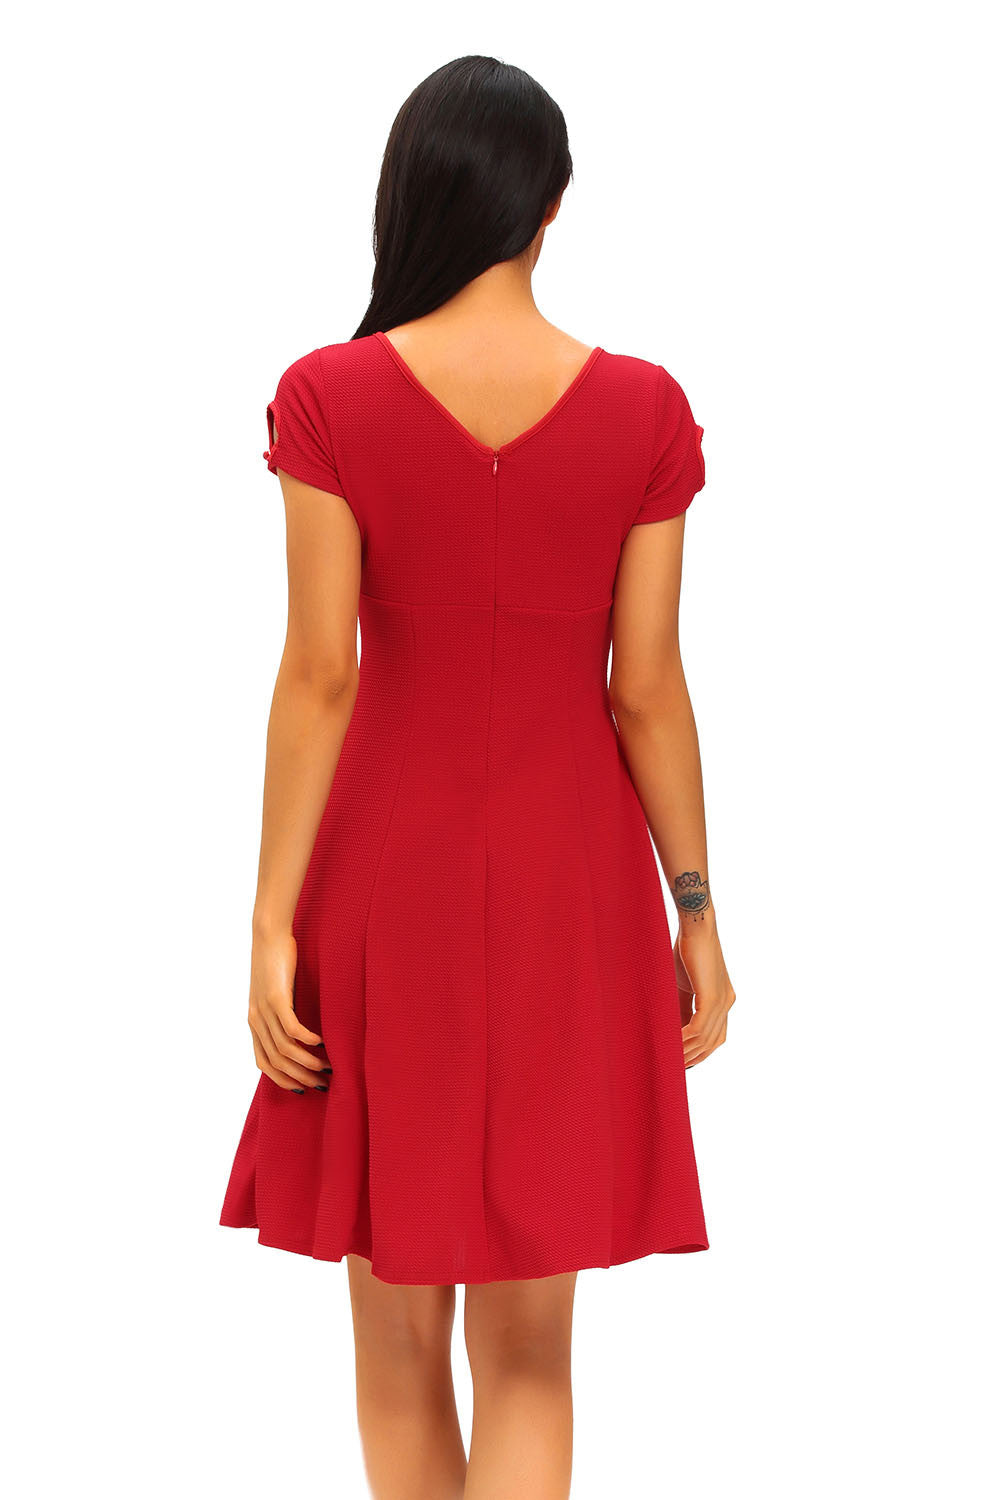 WOMEN CHERRY RED COLLAR STRAP FLARE DRESS